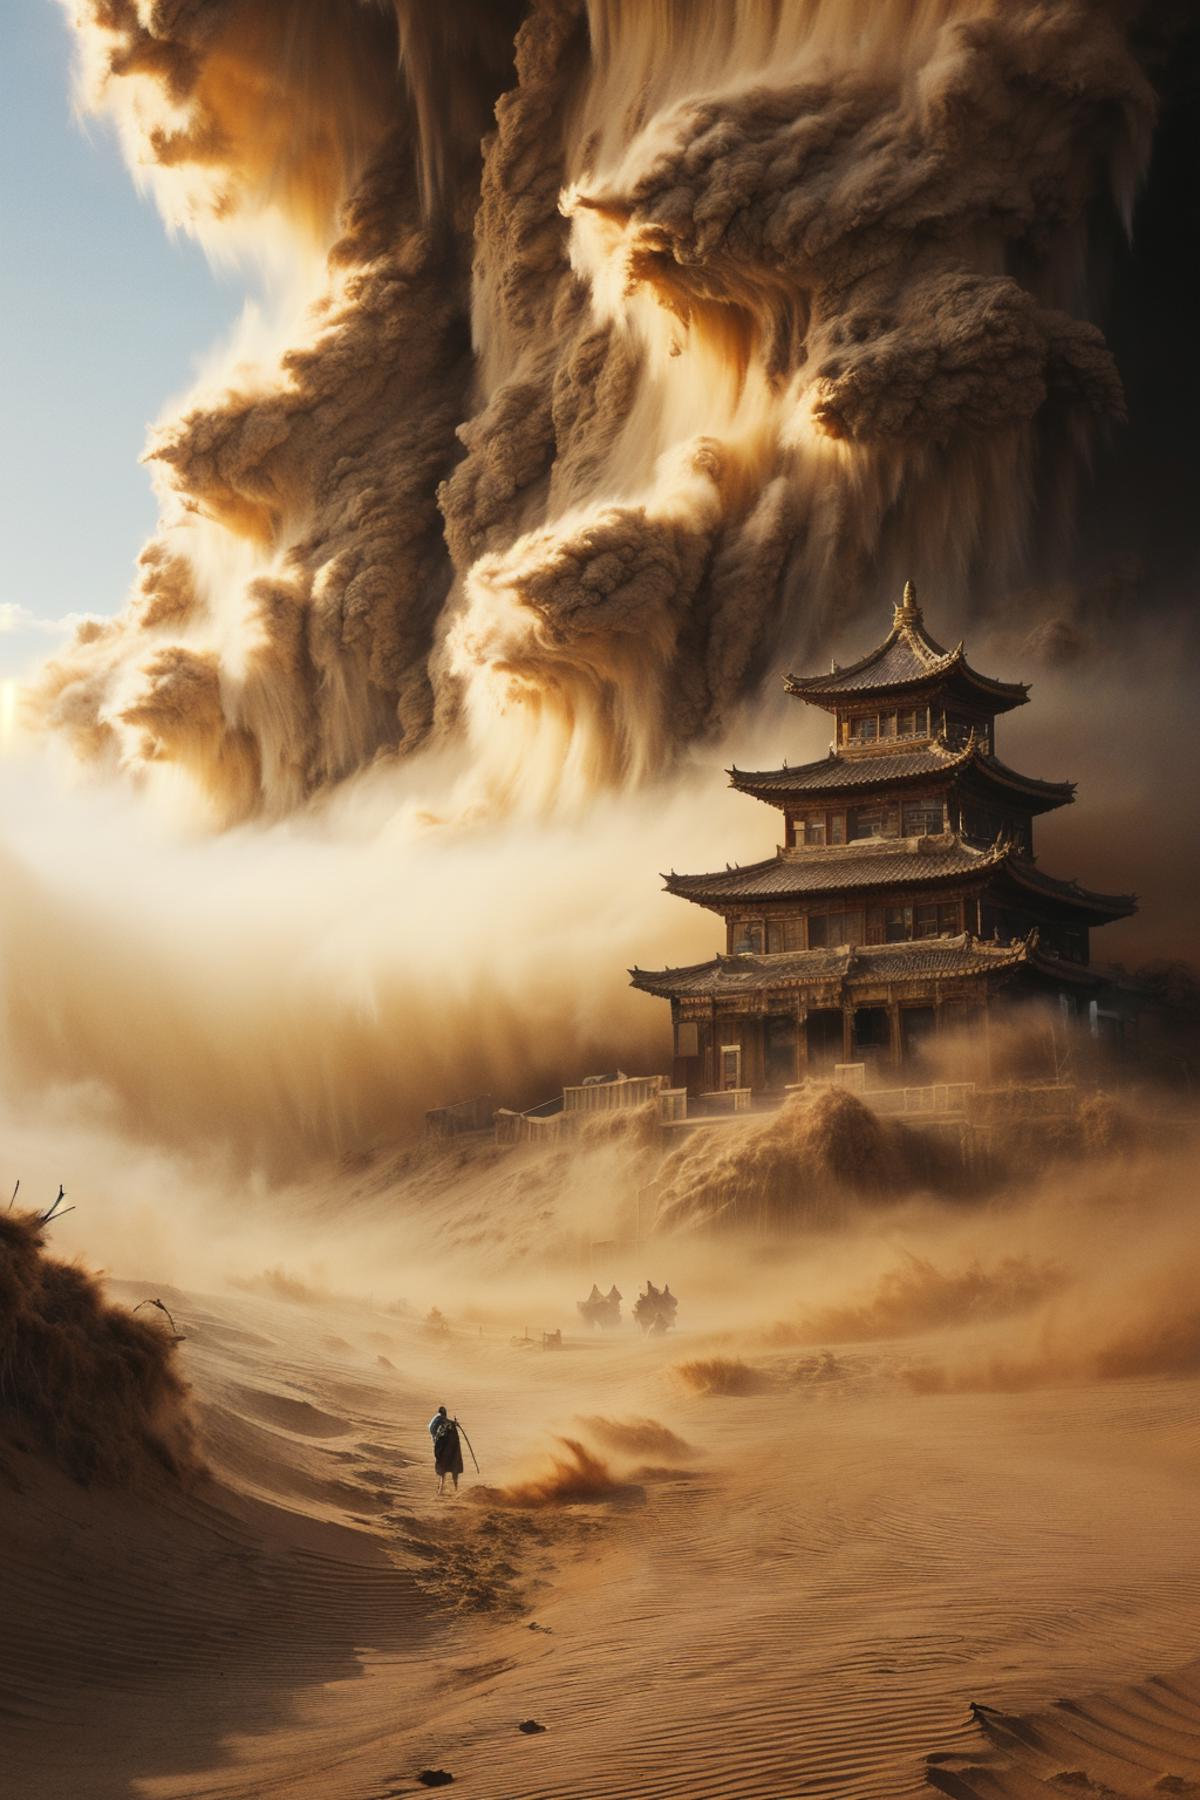 绪儿-末日沙暴 Doomsday sandstorm image by 0_vortex